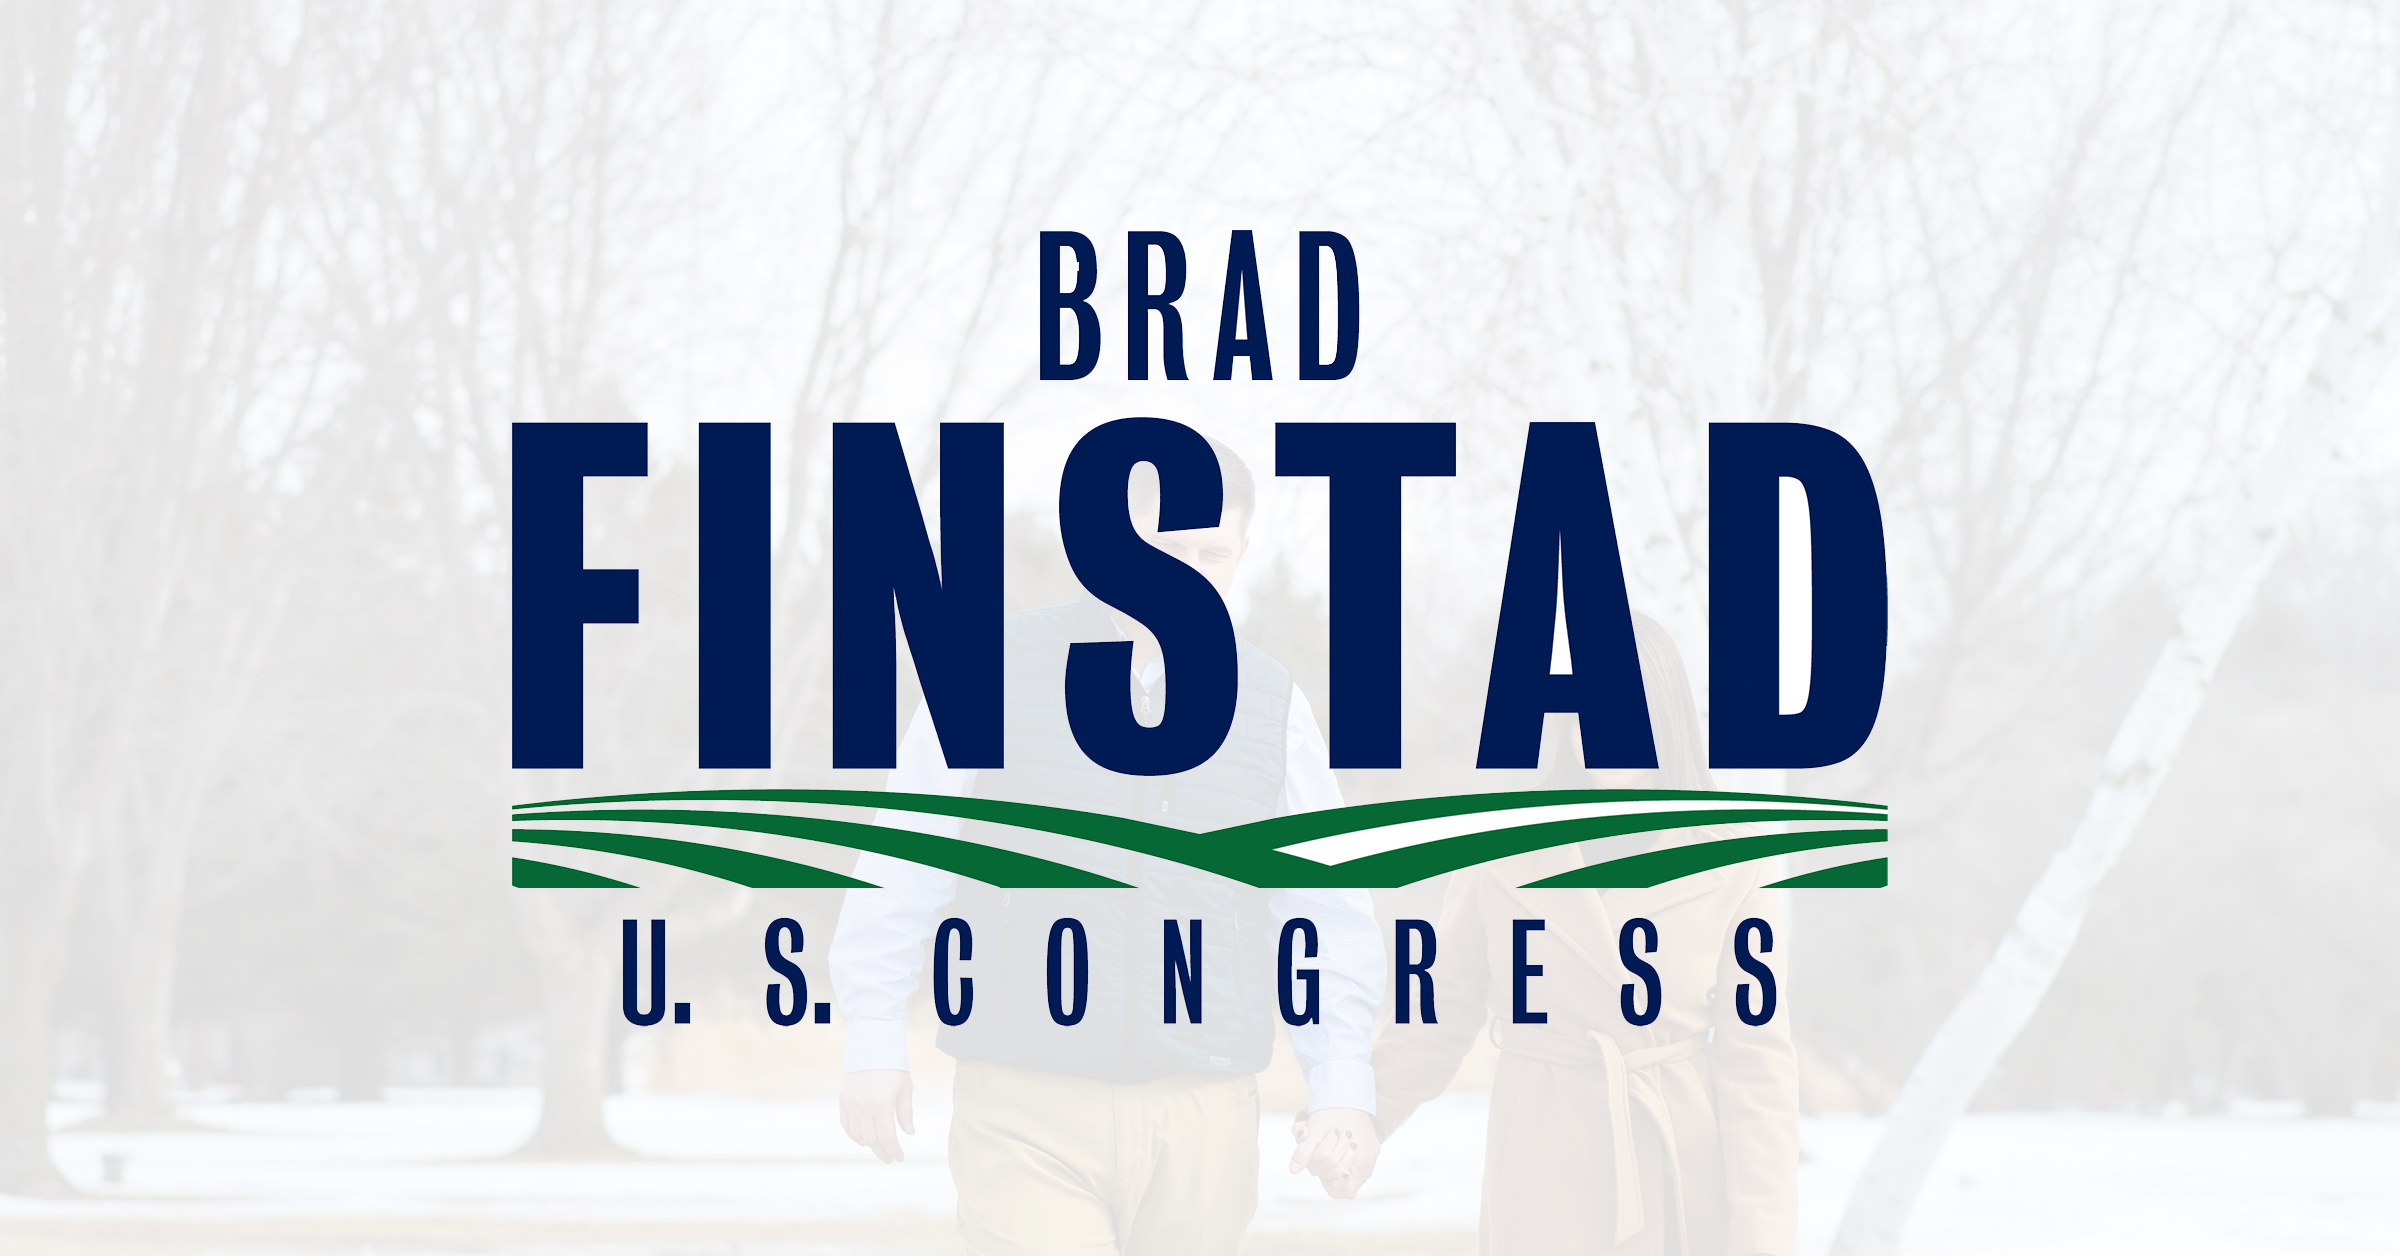 About Brad - United States Congressman Brad Finstad